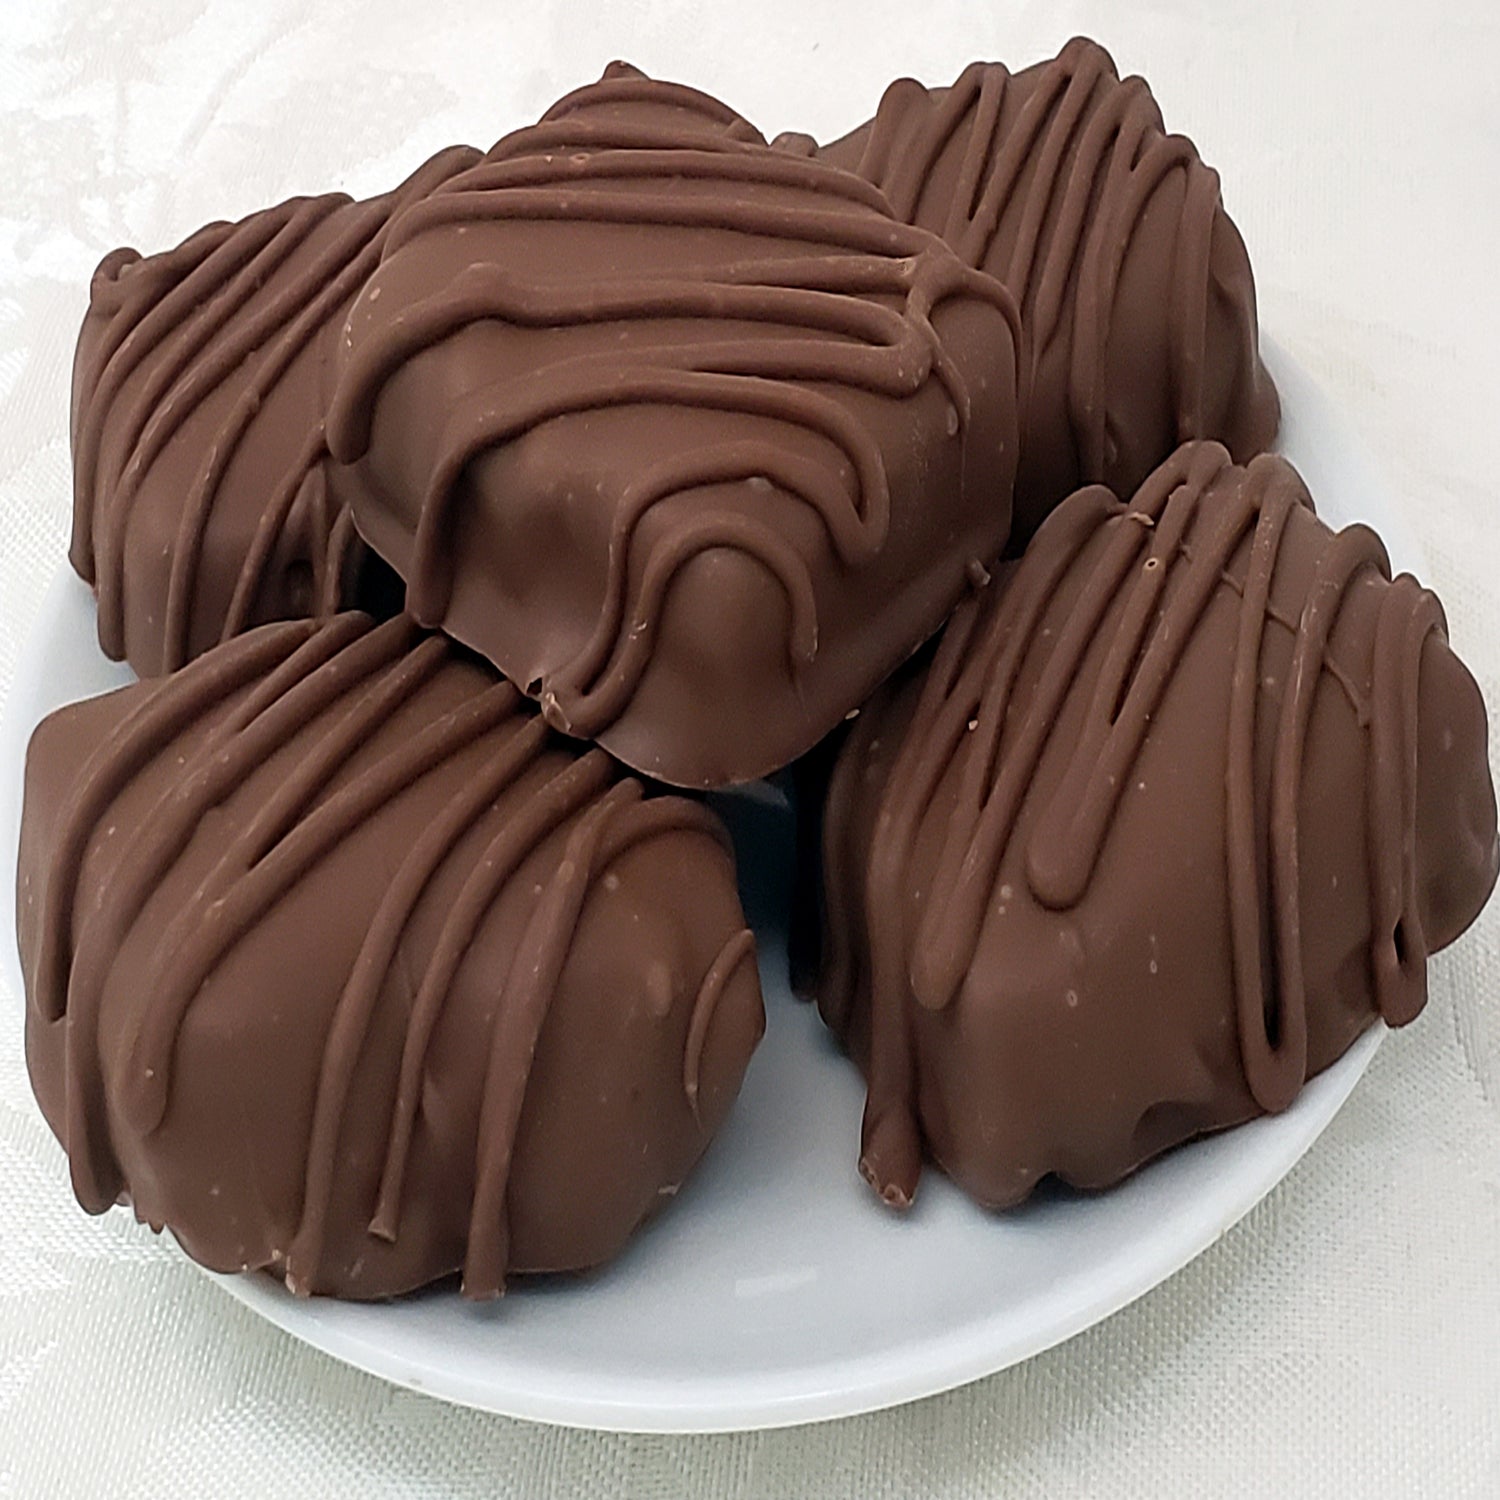 Chocolate Covered Fruitcake